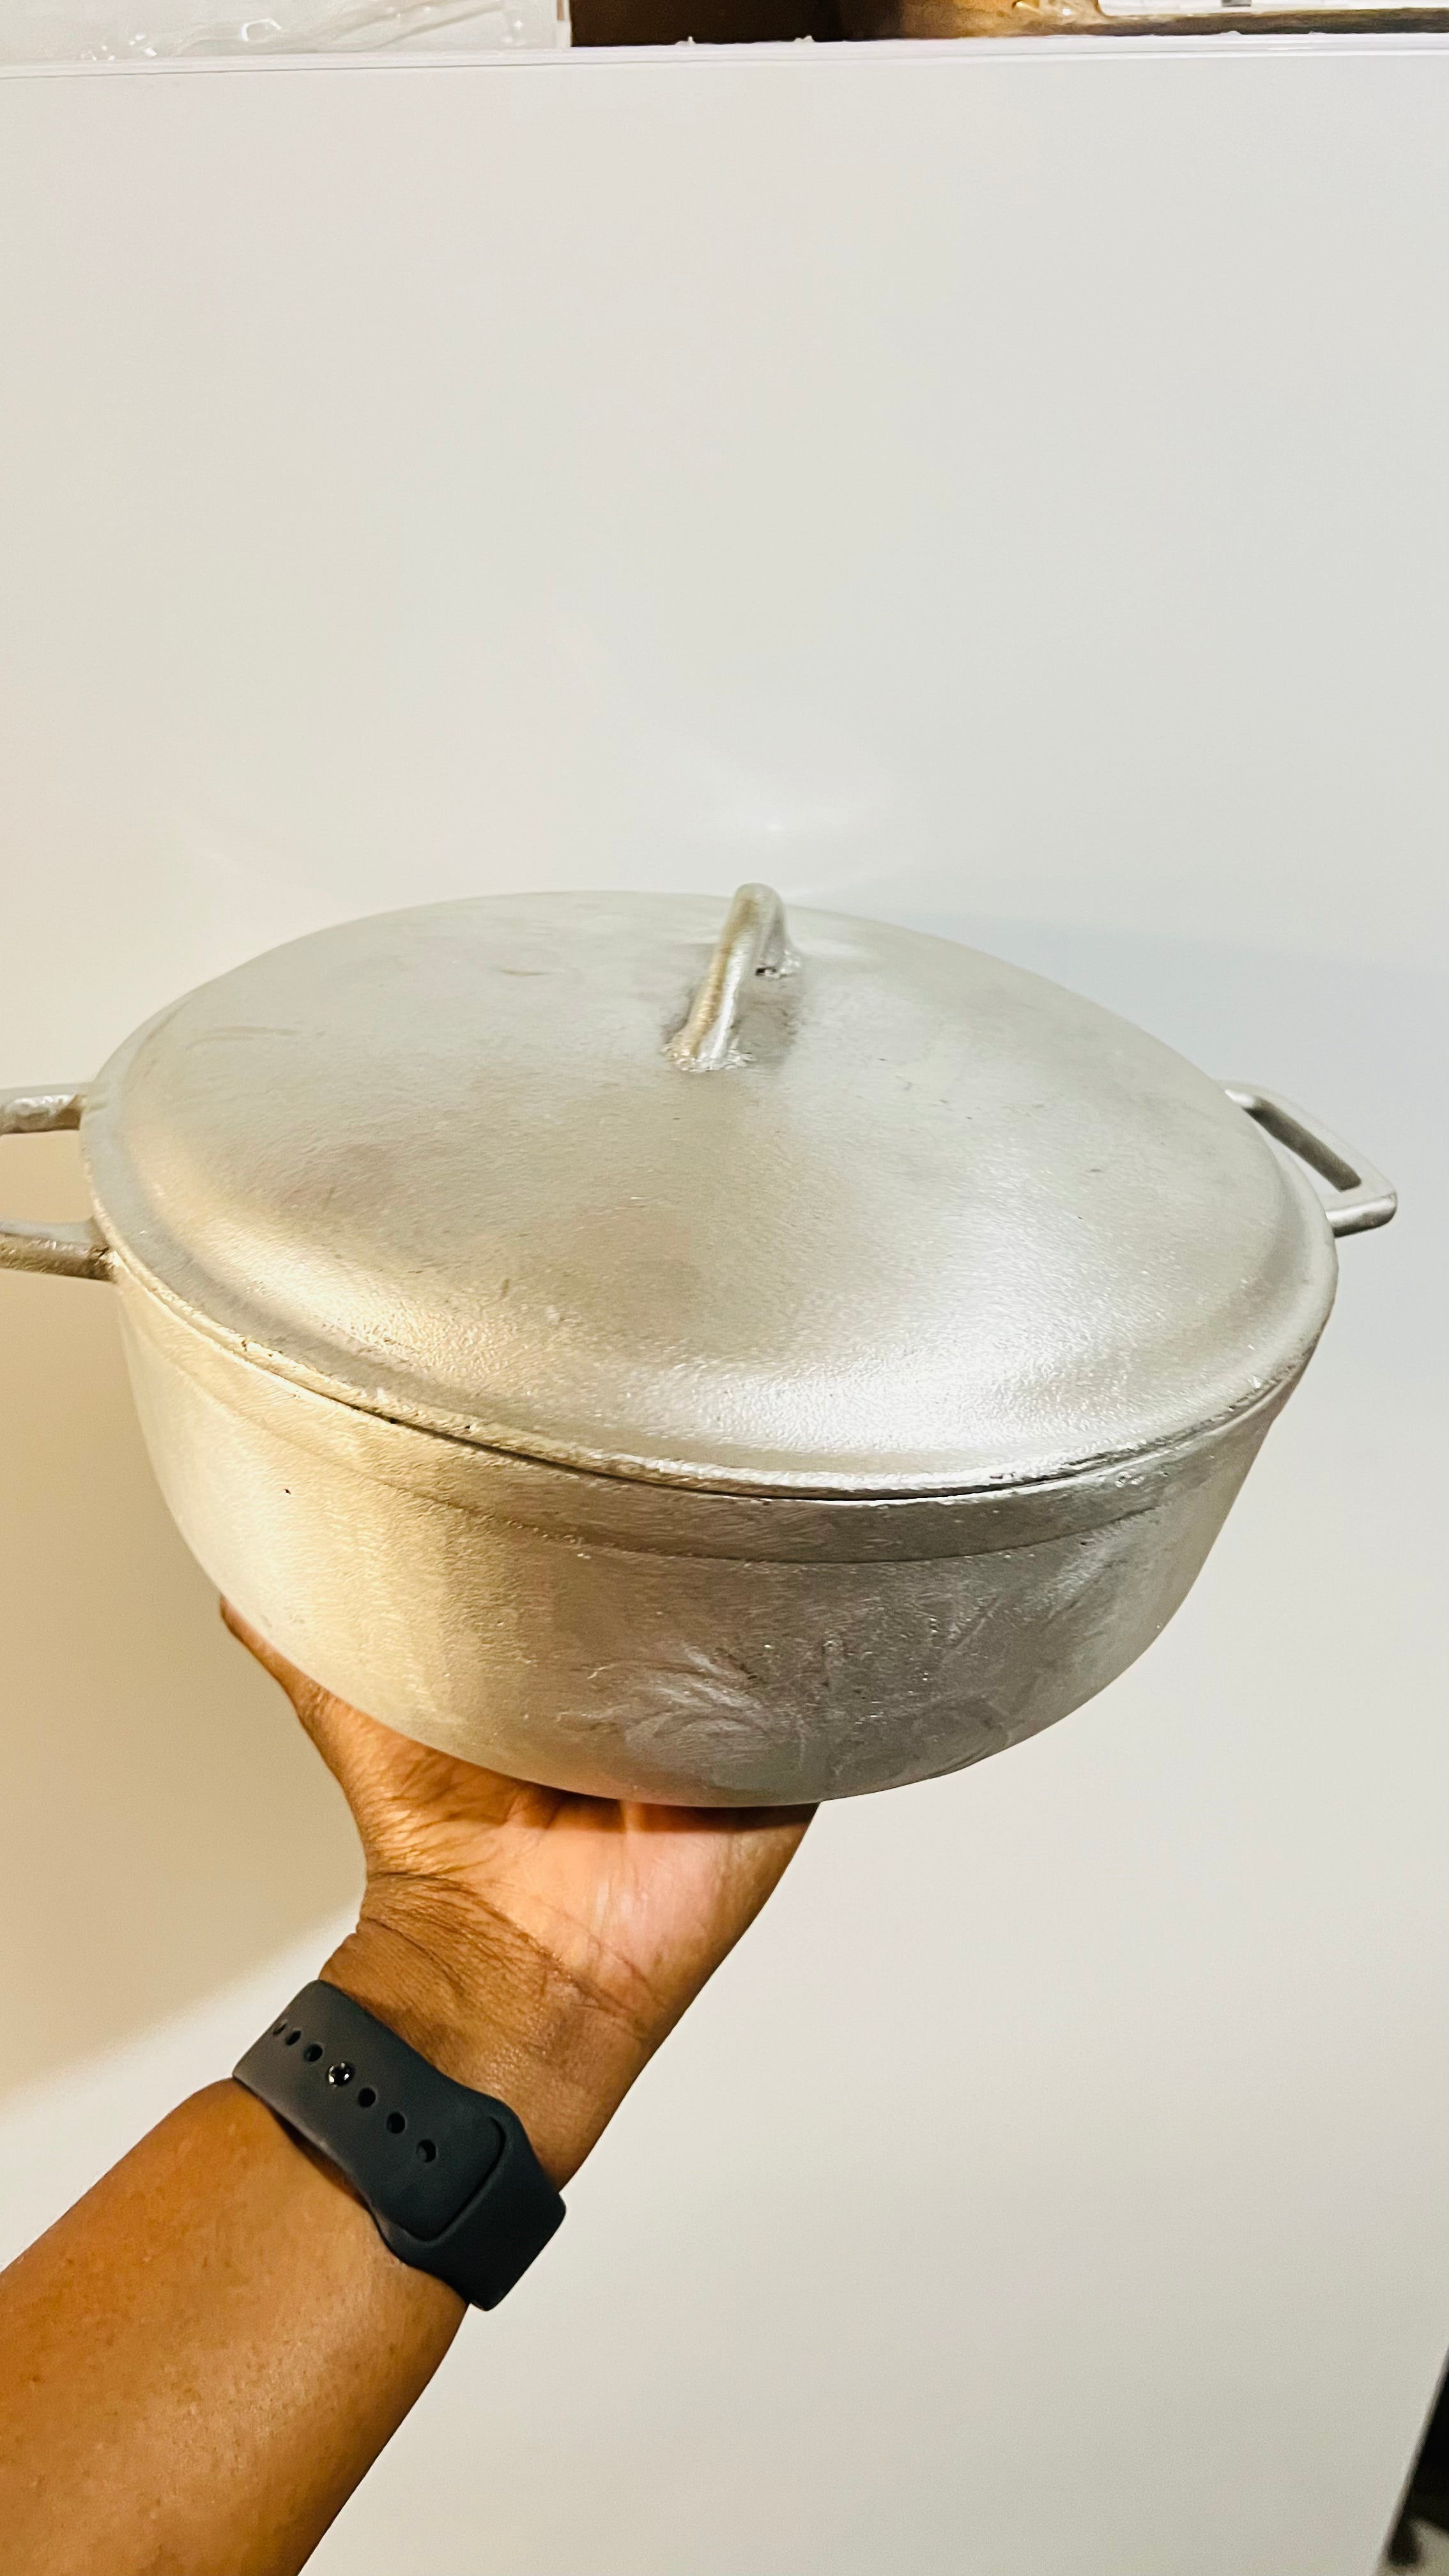 100% Jamaican 9 Dutch (Dutchie) Cooking Pot. Real Aluminum pot with FREE  GIFT